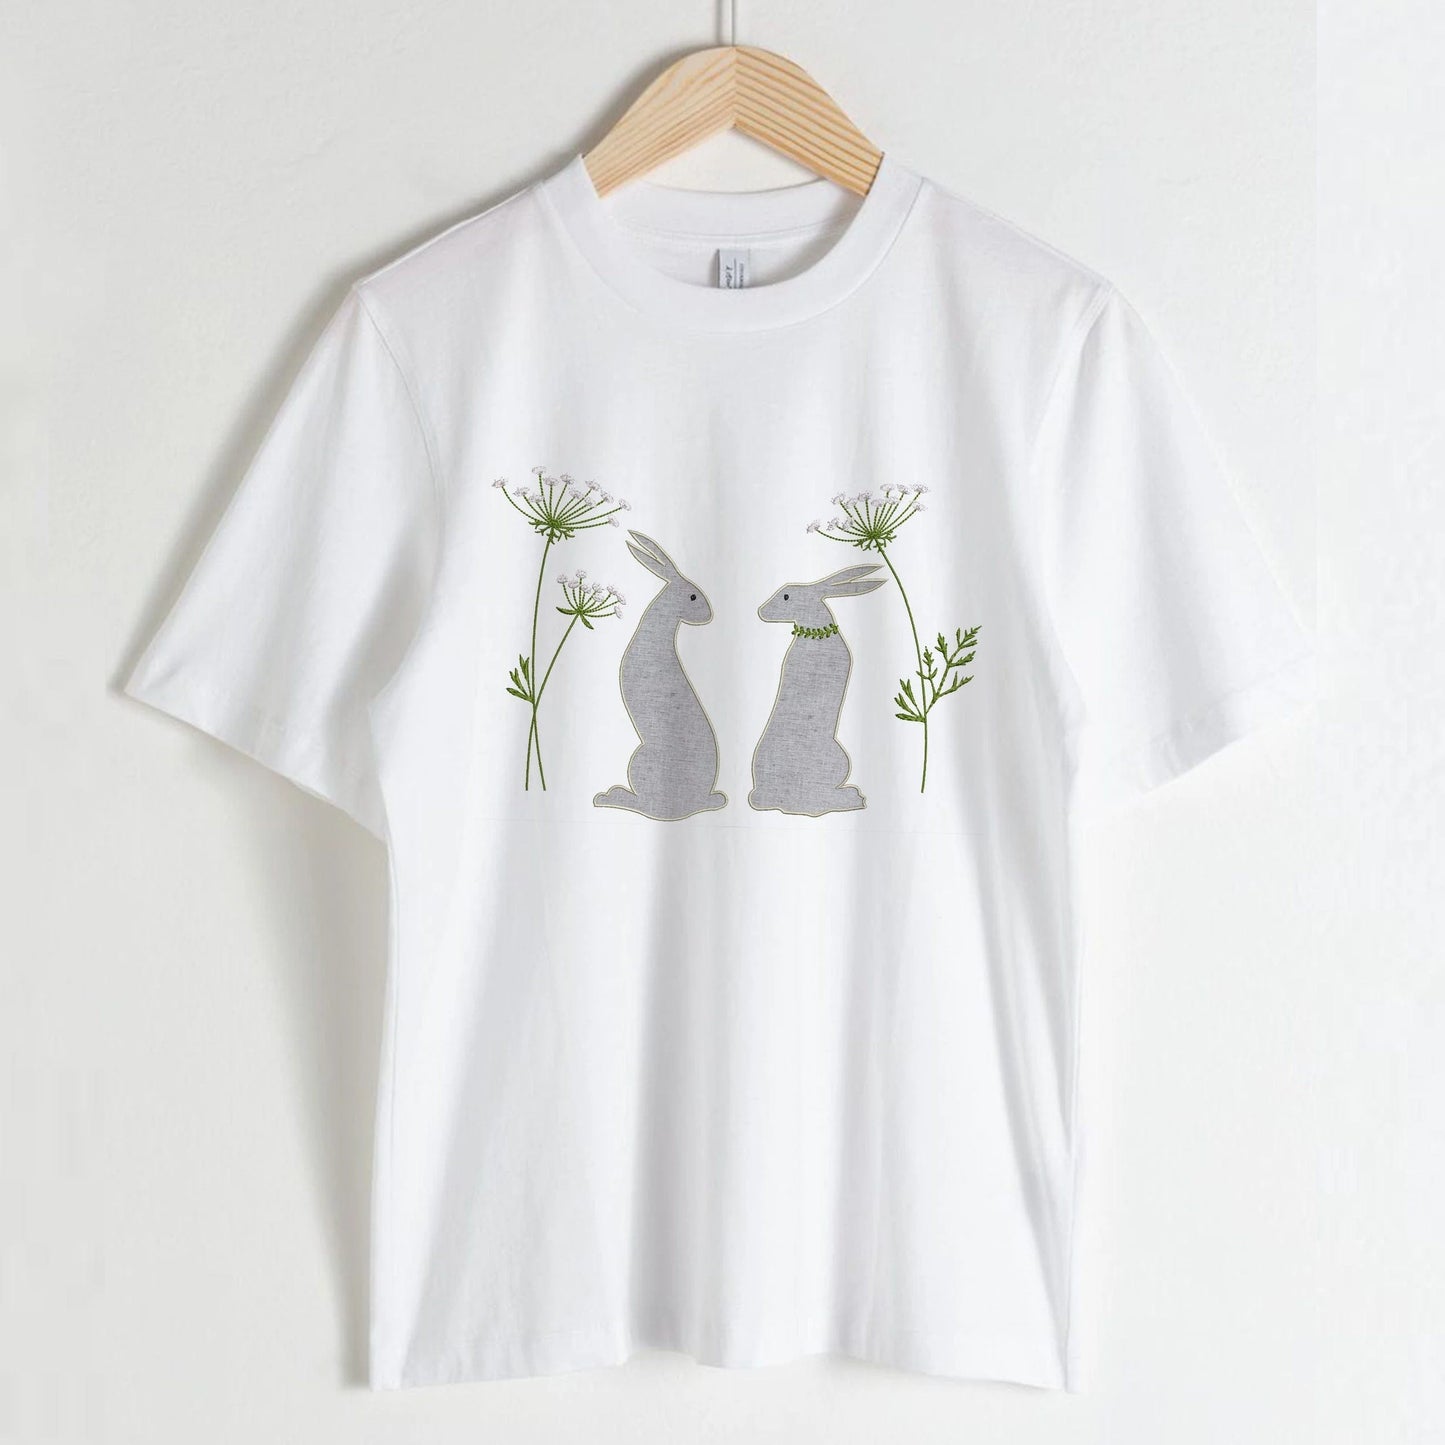 Rabbit Applique Machine Embroidery Design on t-shirt